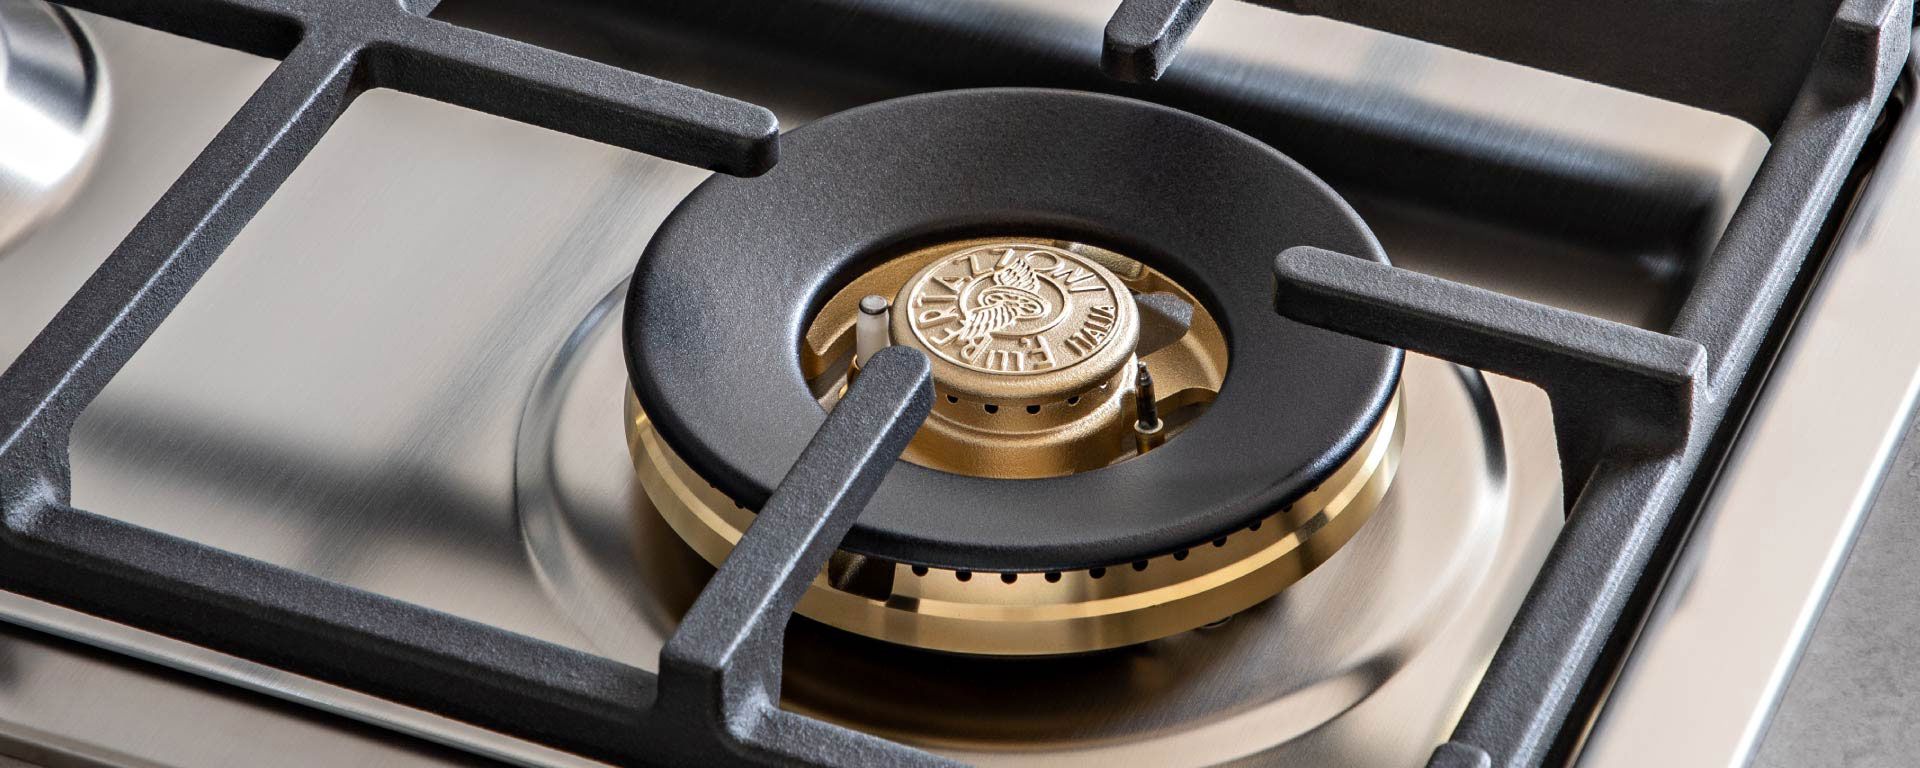 bertazzoni luxury appliance burner ring at caterbitz